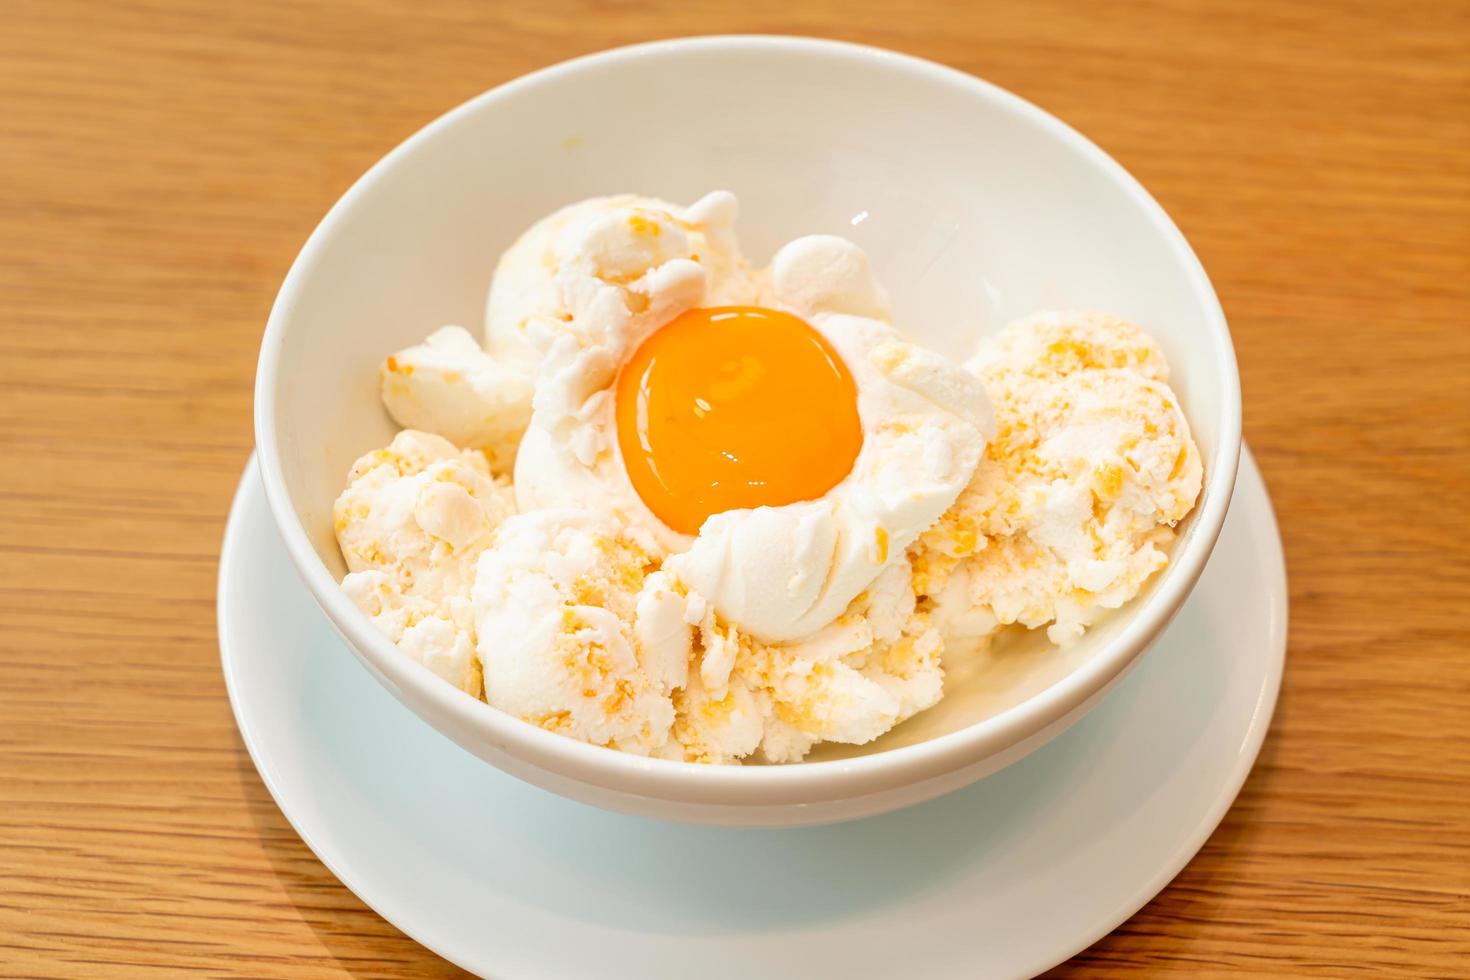 Frozen eggs ice-cream with an egg yolk photo